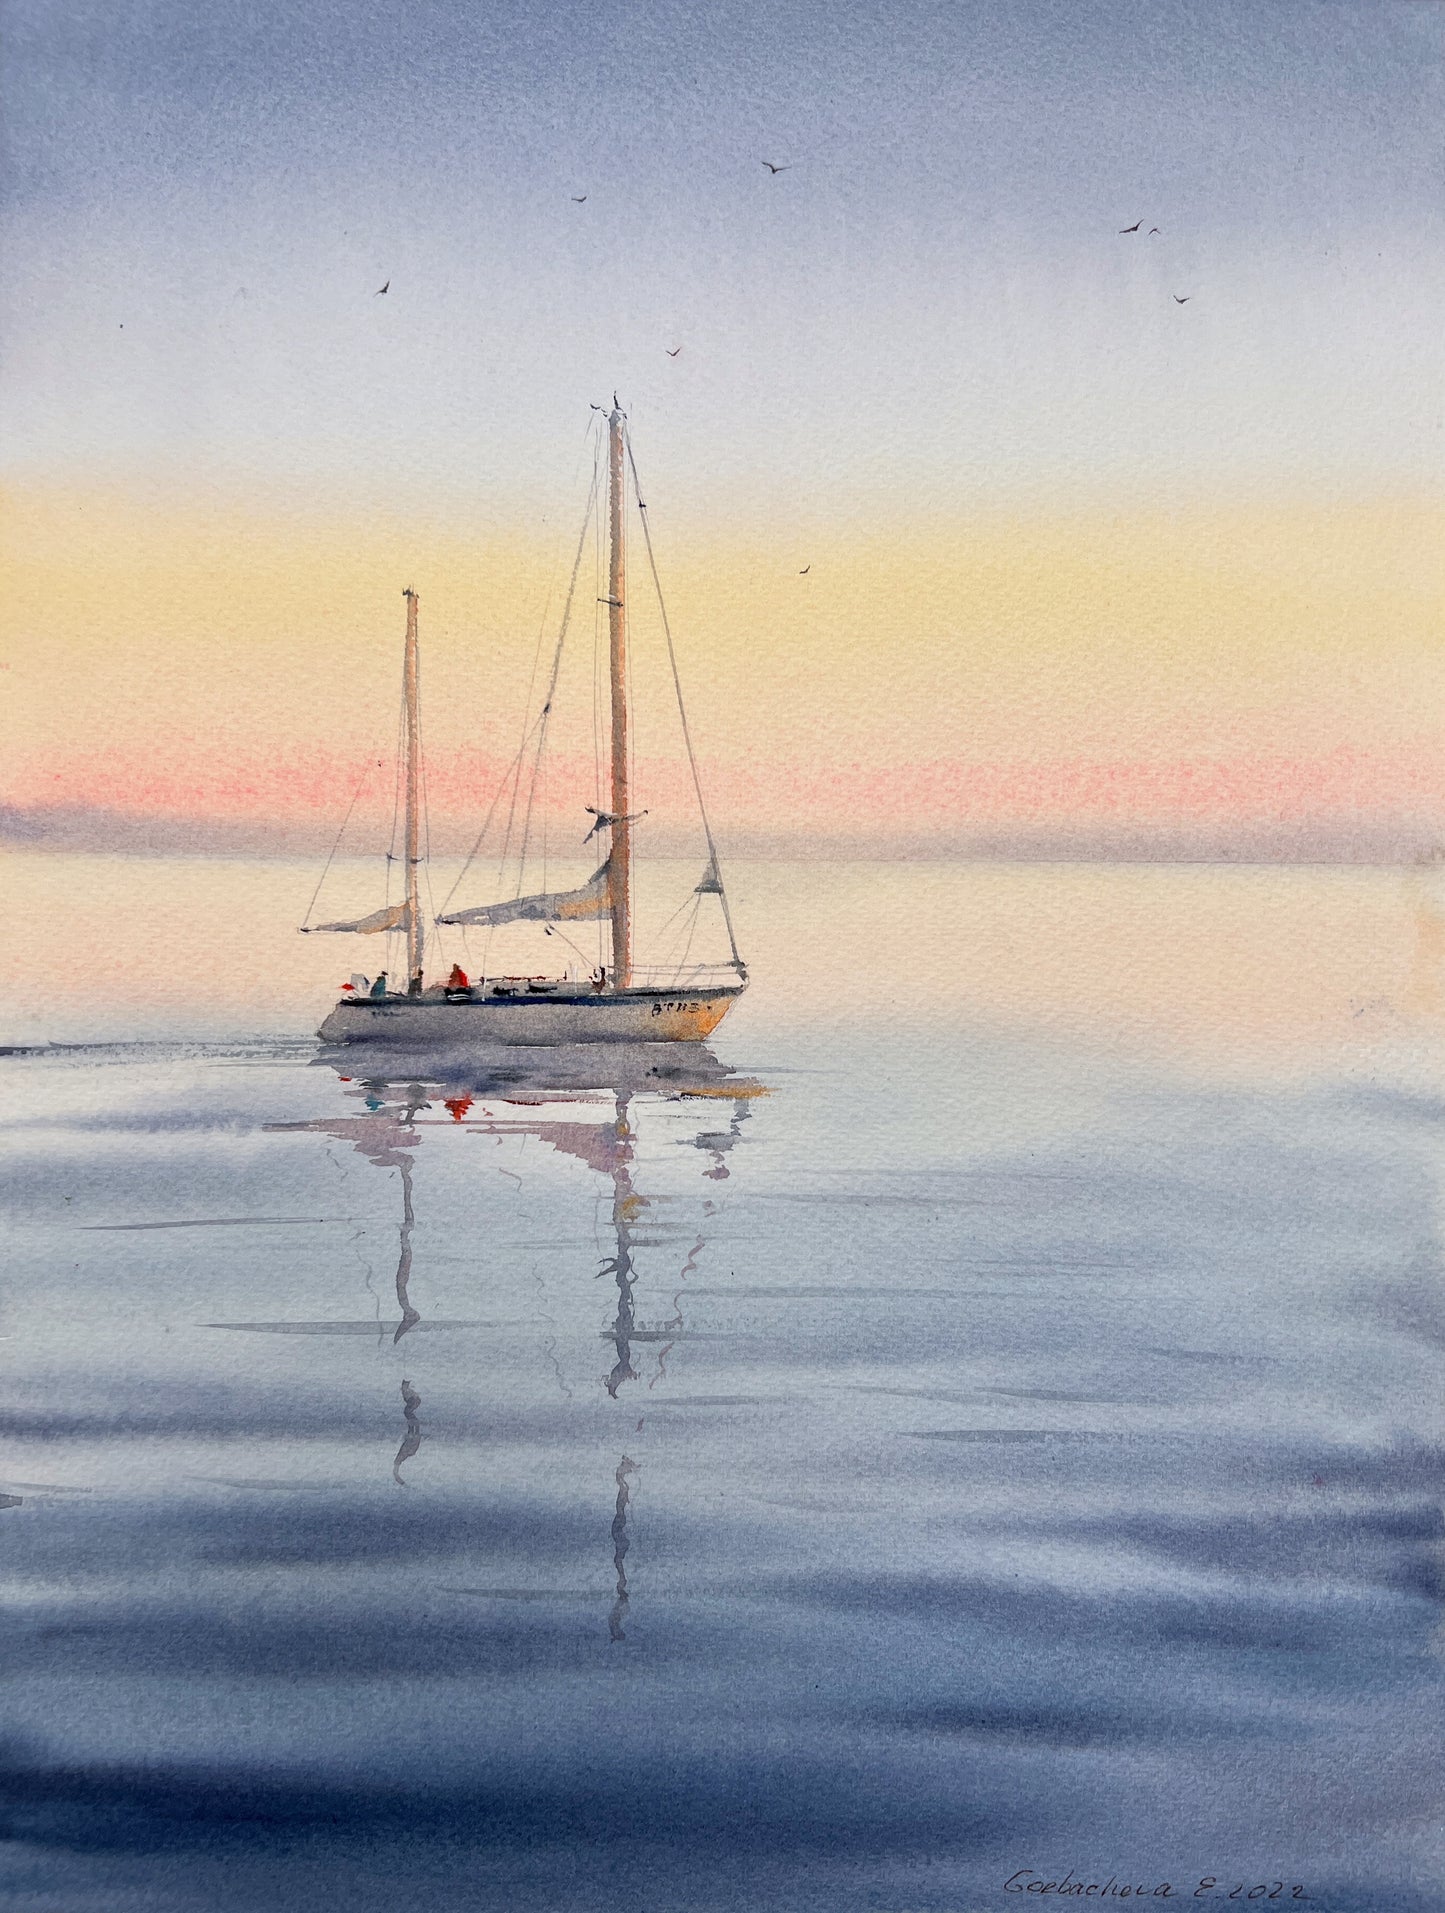 Nautical Painting Original Watercolor, Yacht Wall Art, Sailboat Artwork, Seascape, Coastal Art Decor